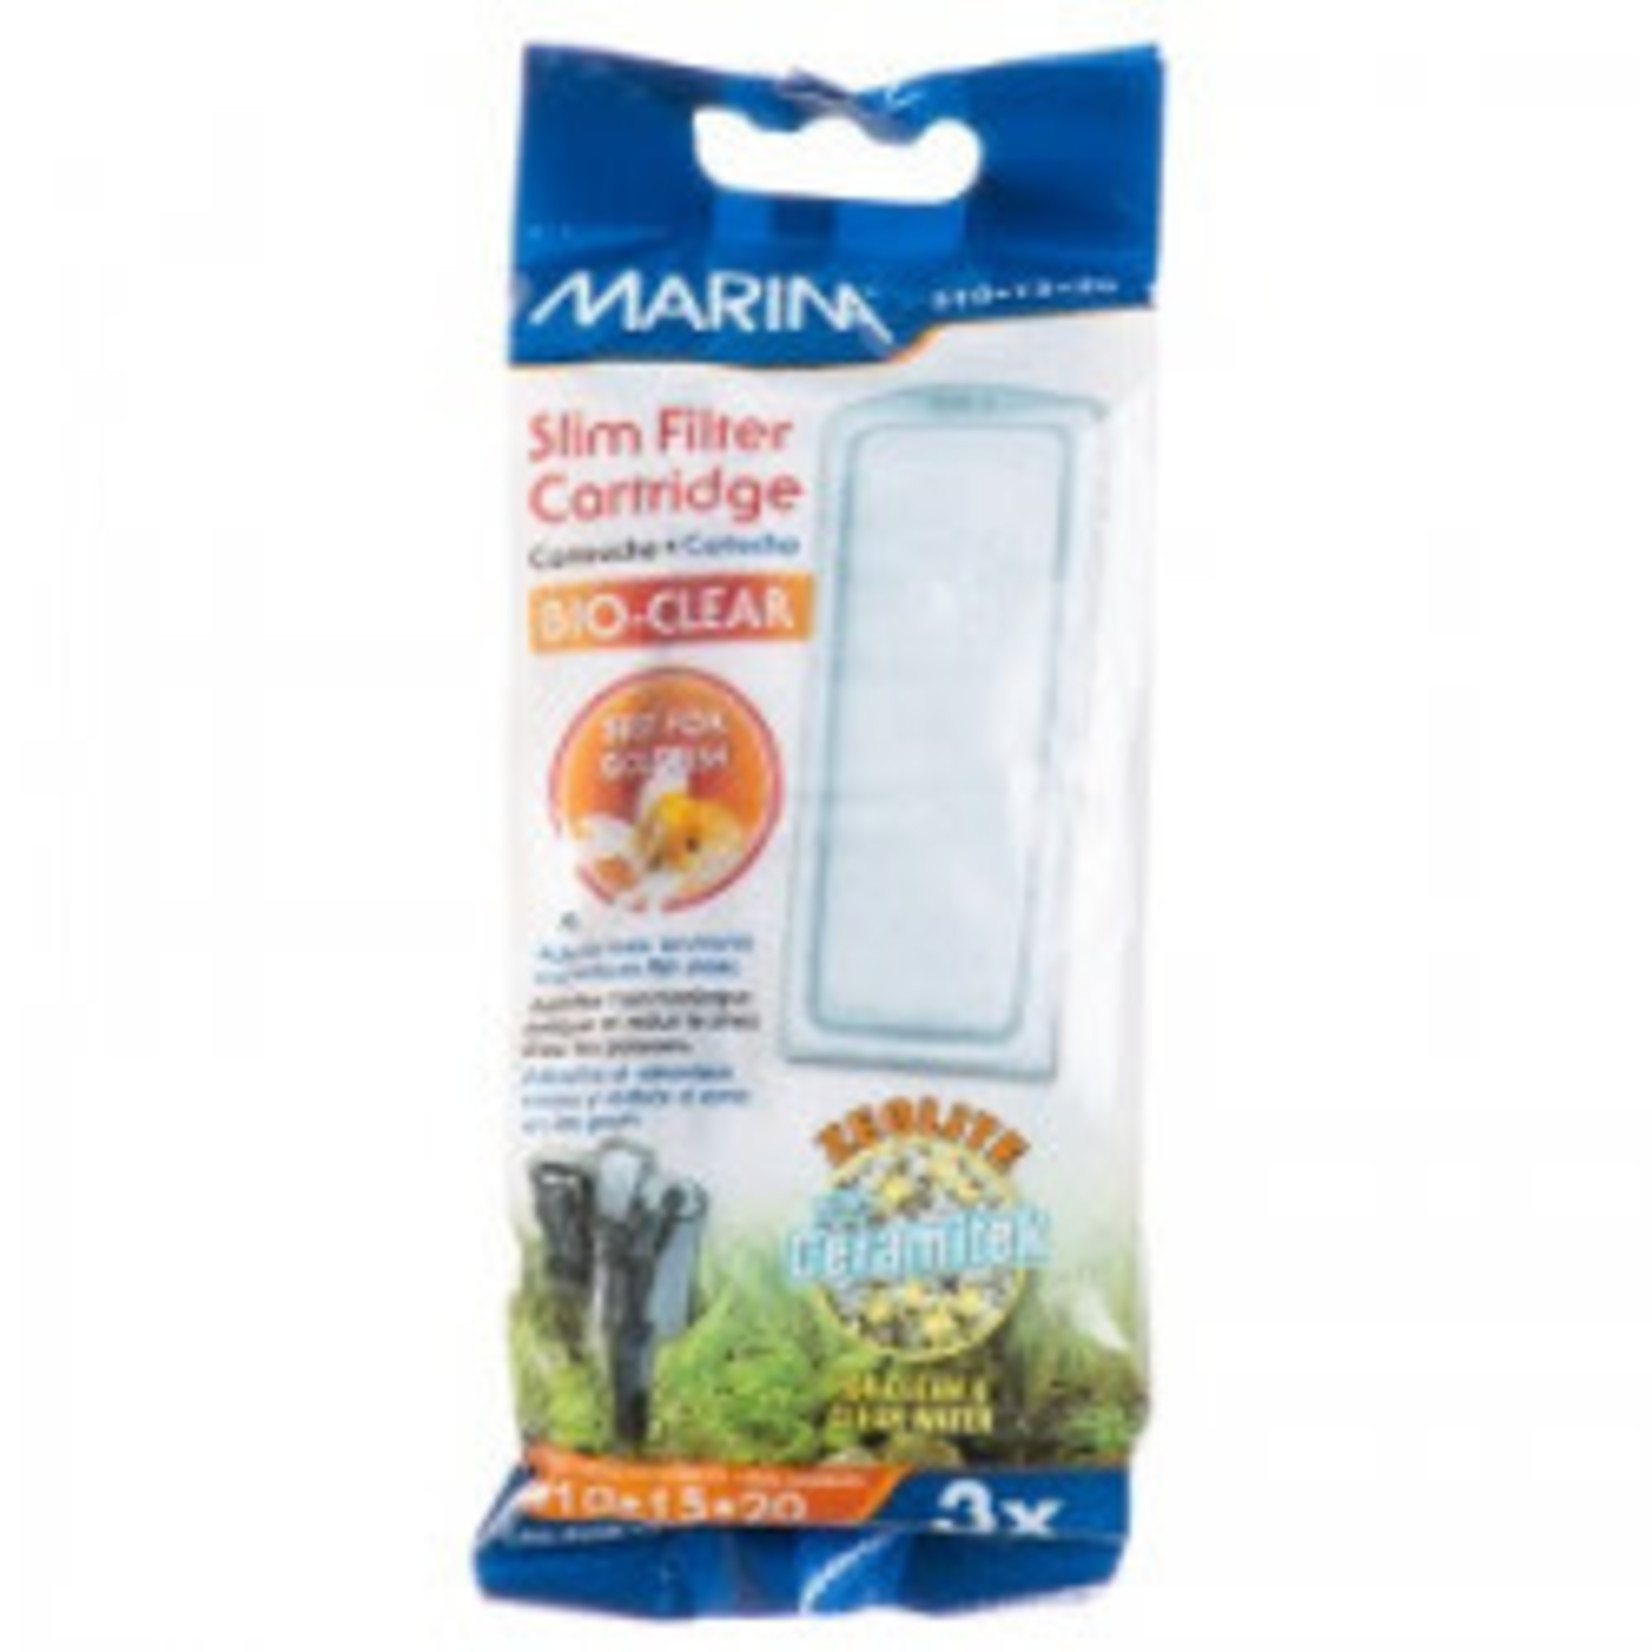 MARINA Marina Slim Filter Zeolite Plus Ceramic Cartridge, 3-pk